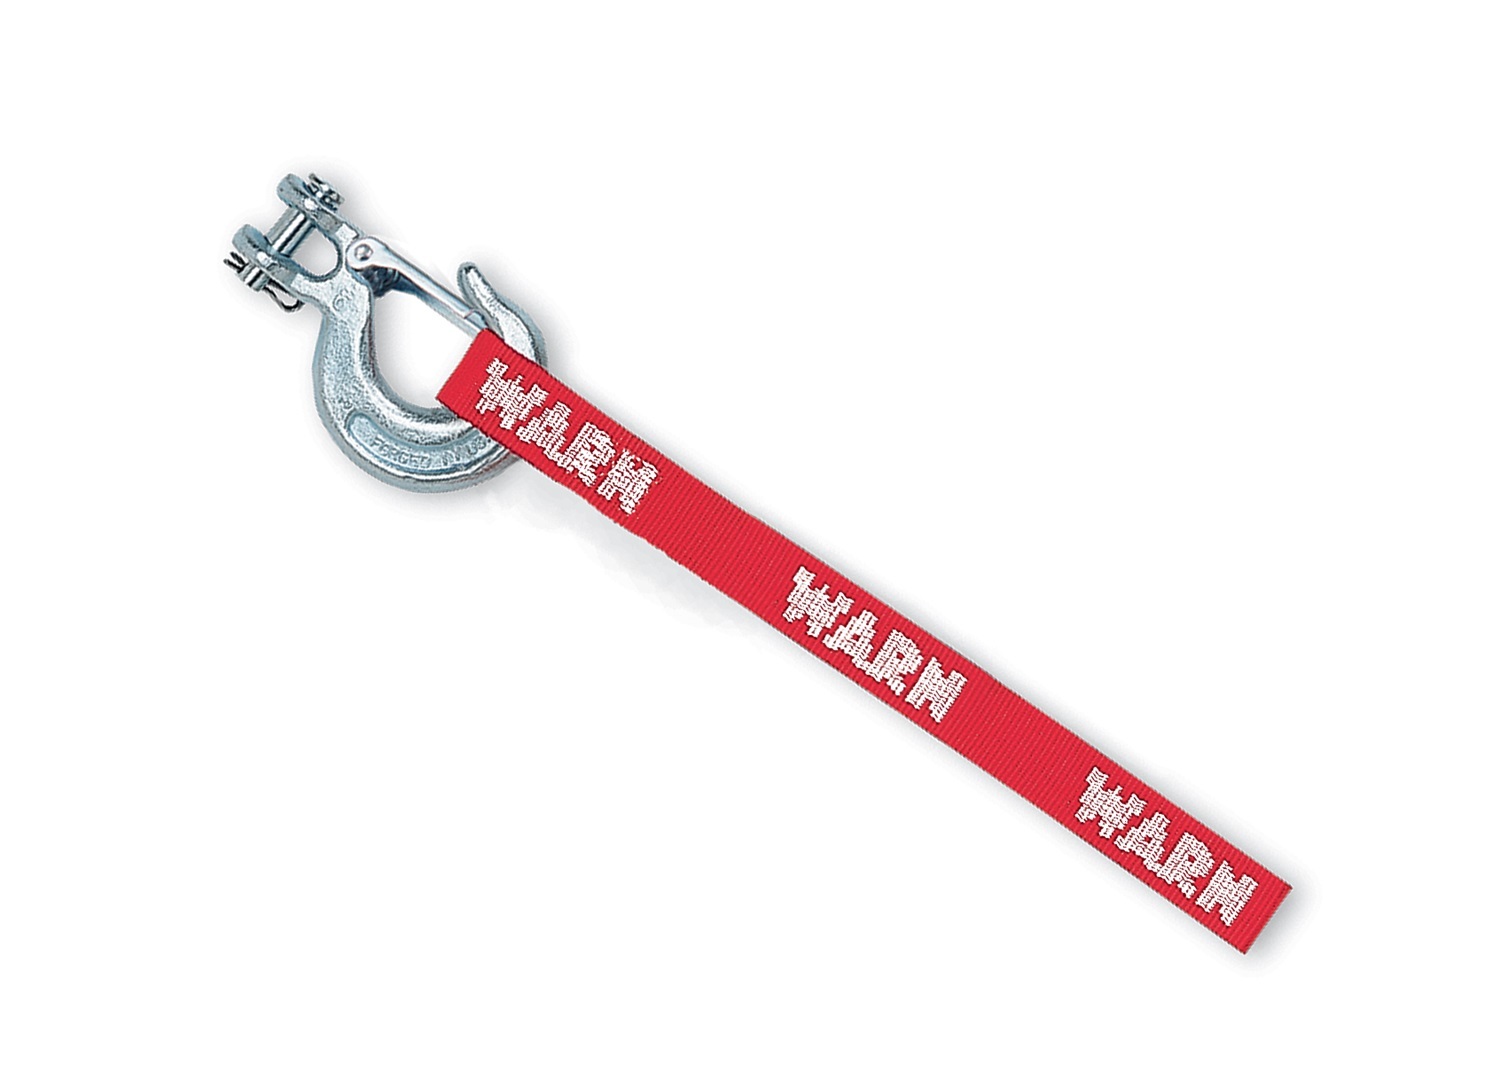 warn39557-warn-39557-atv-hook-and-strap.jpg